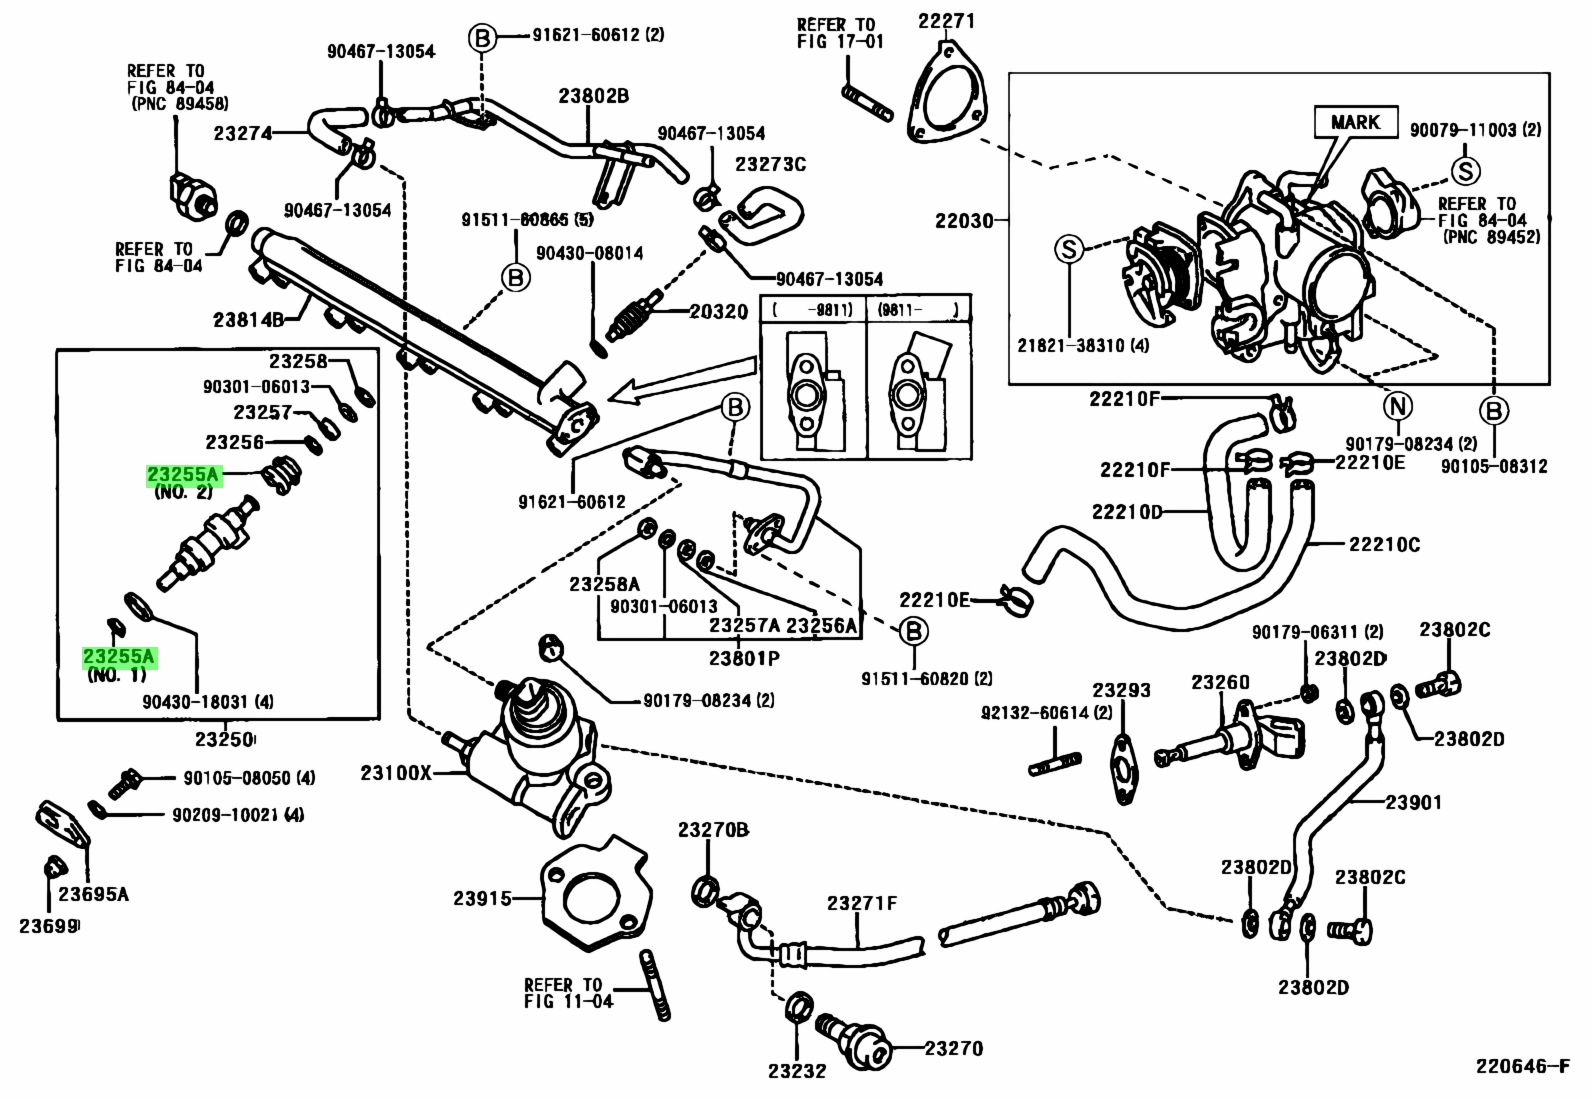 Топливная система Виста Ардео 3s Фе